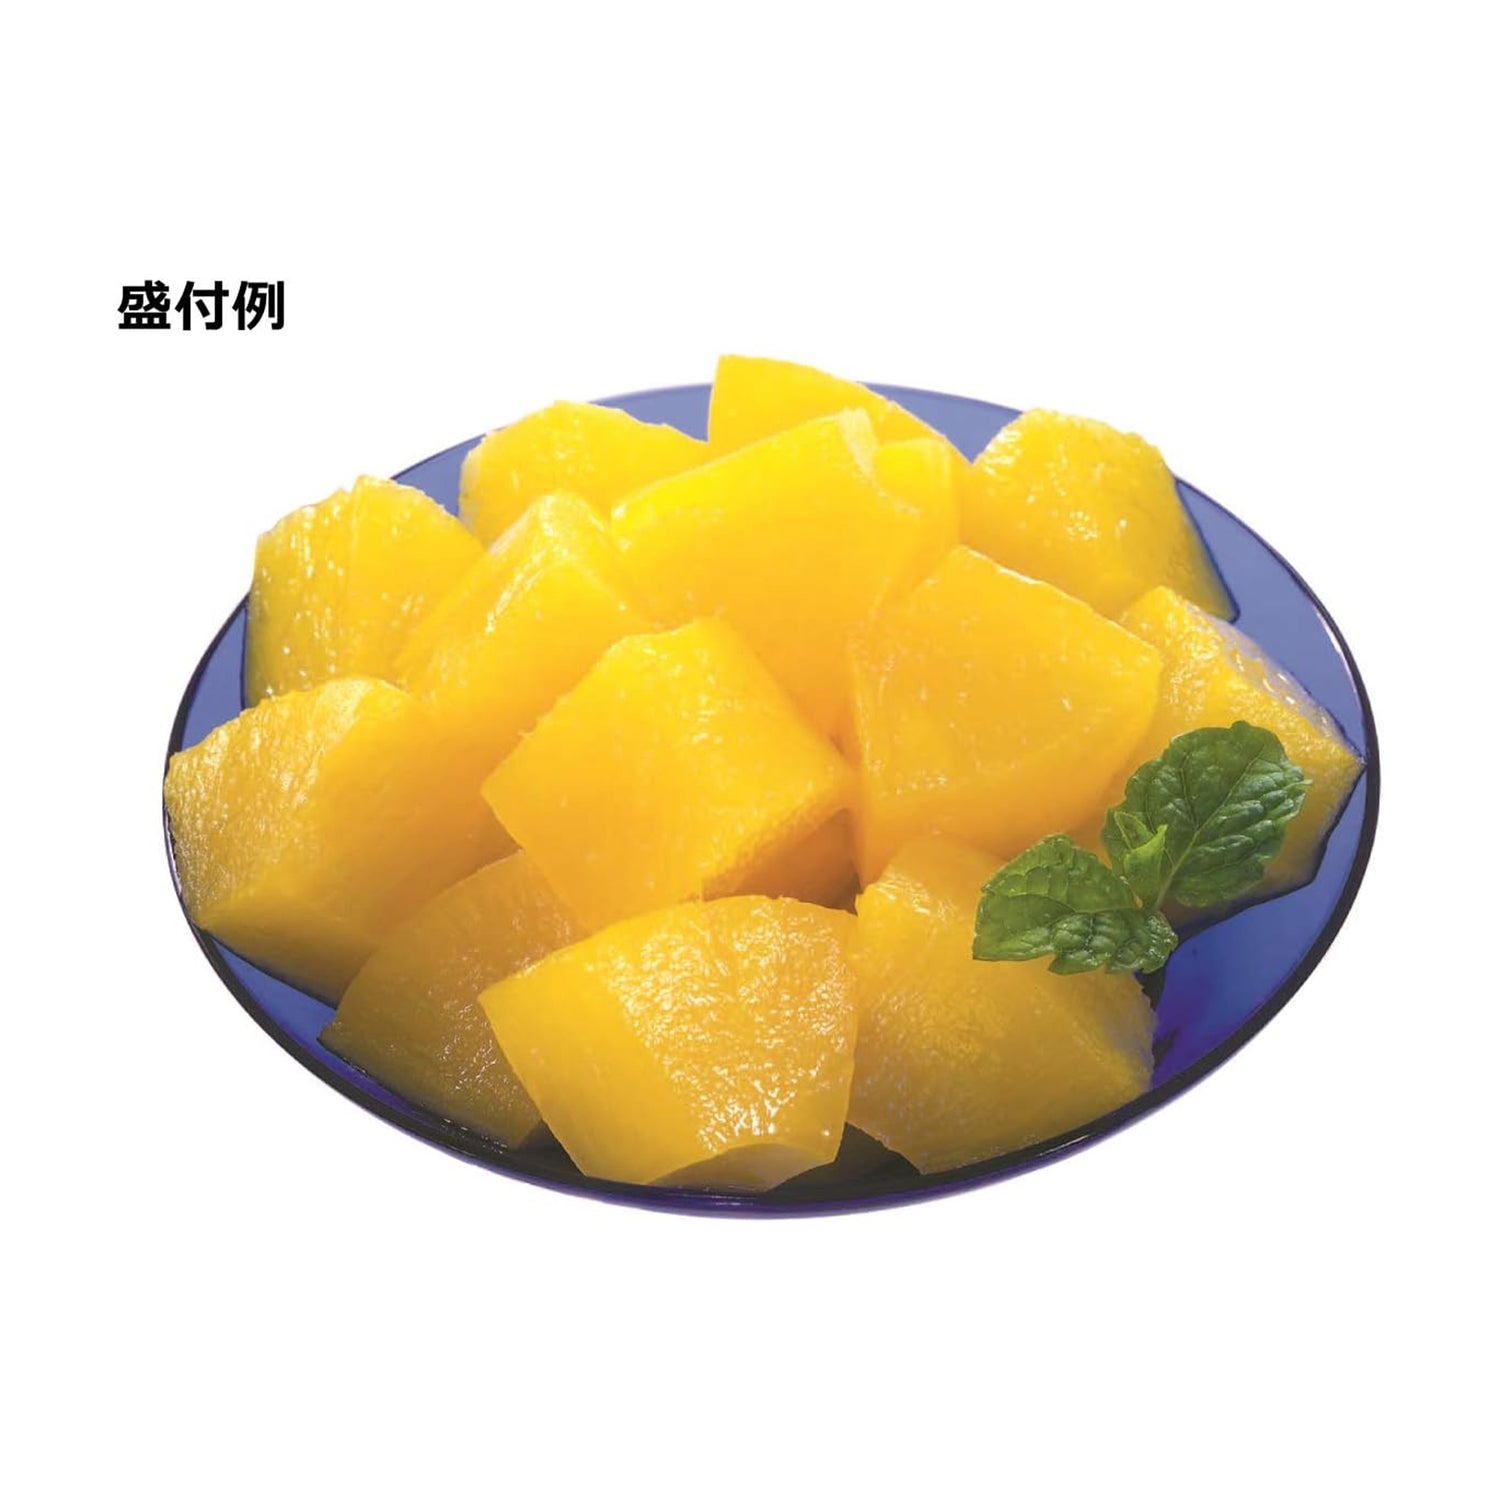 HAGOROMO Morning Fruit Pineapple Canned 190g